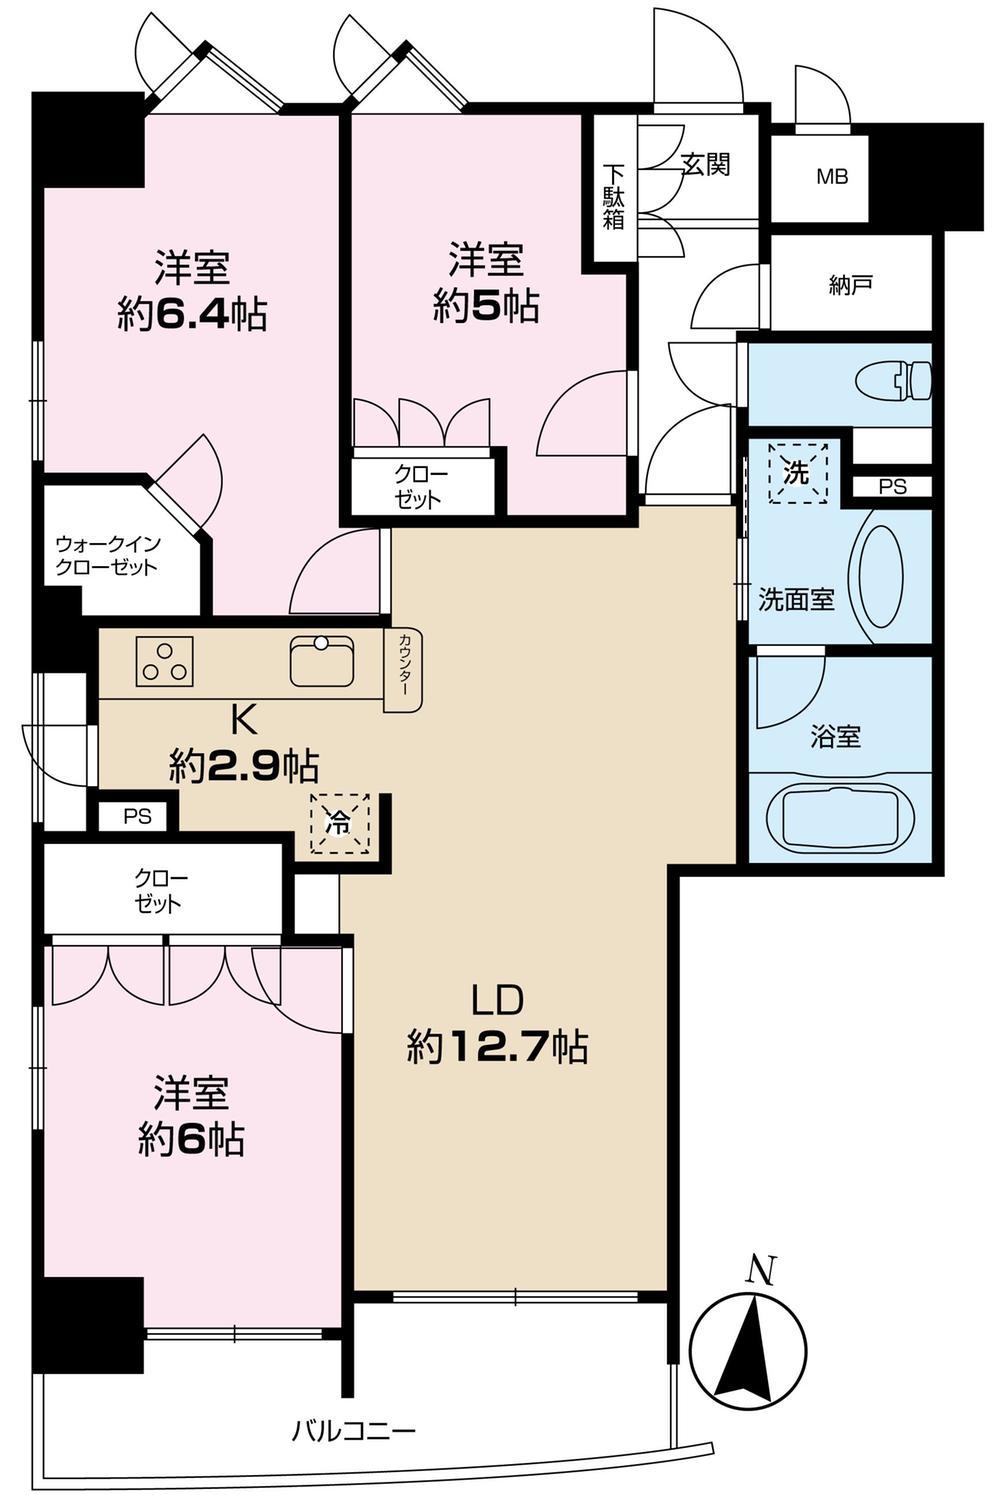 Floor plan. 3LDK, Price 48,500,000 yen, Occupied area 74.26 sq m , Balcony area 8.19 sq m